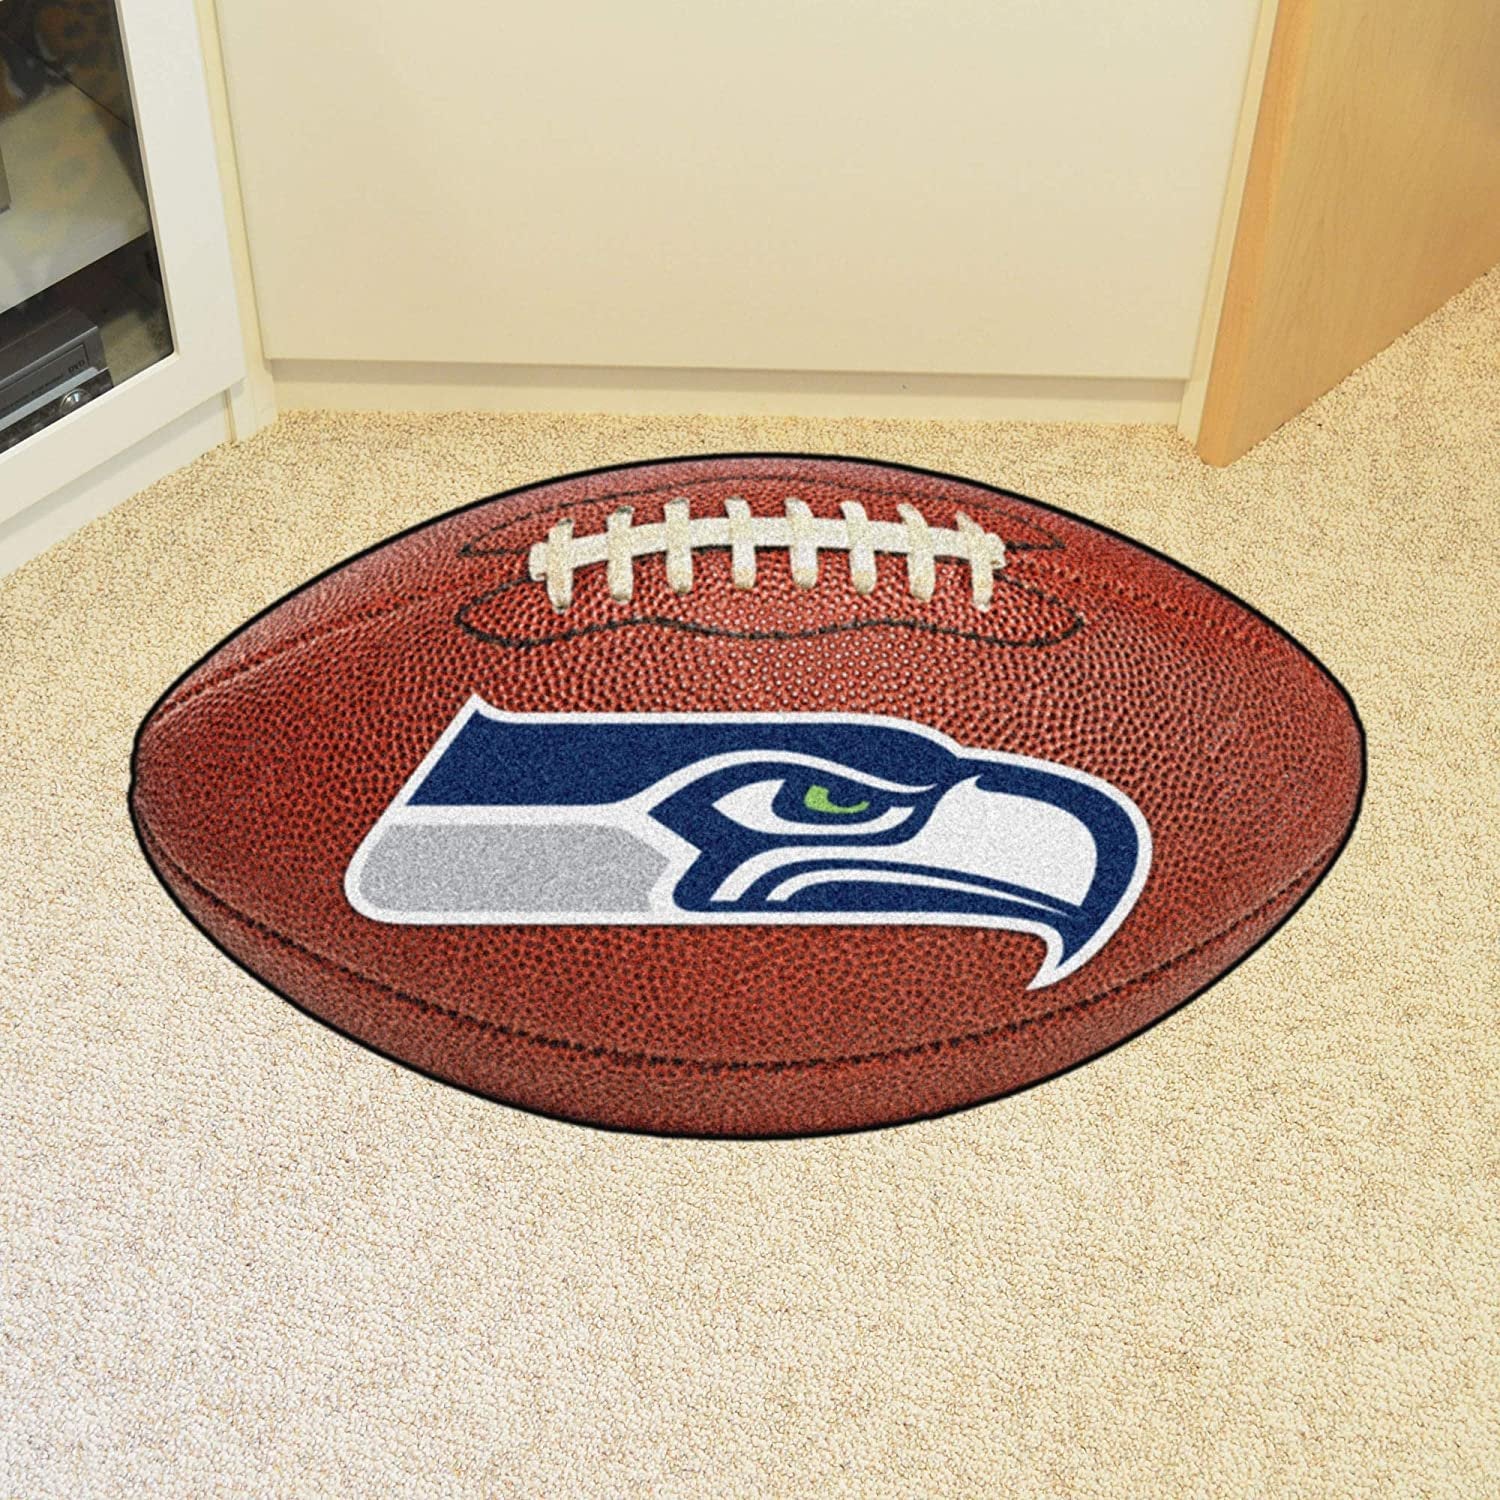 Seattle Seahawks Floor Mat Area Rug, 20x32 Inch, Non-Skid Backing, Football Design